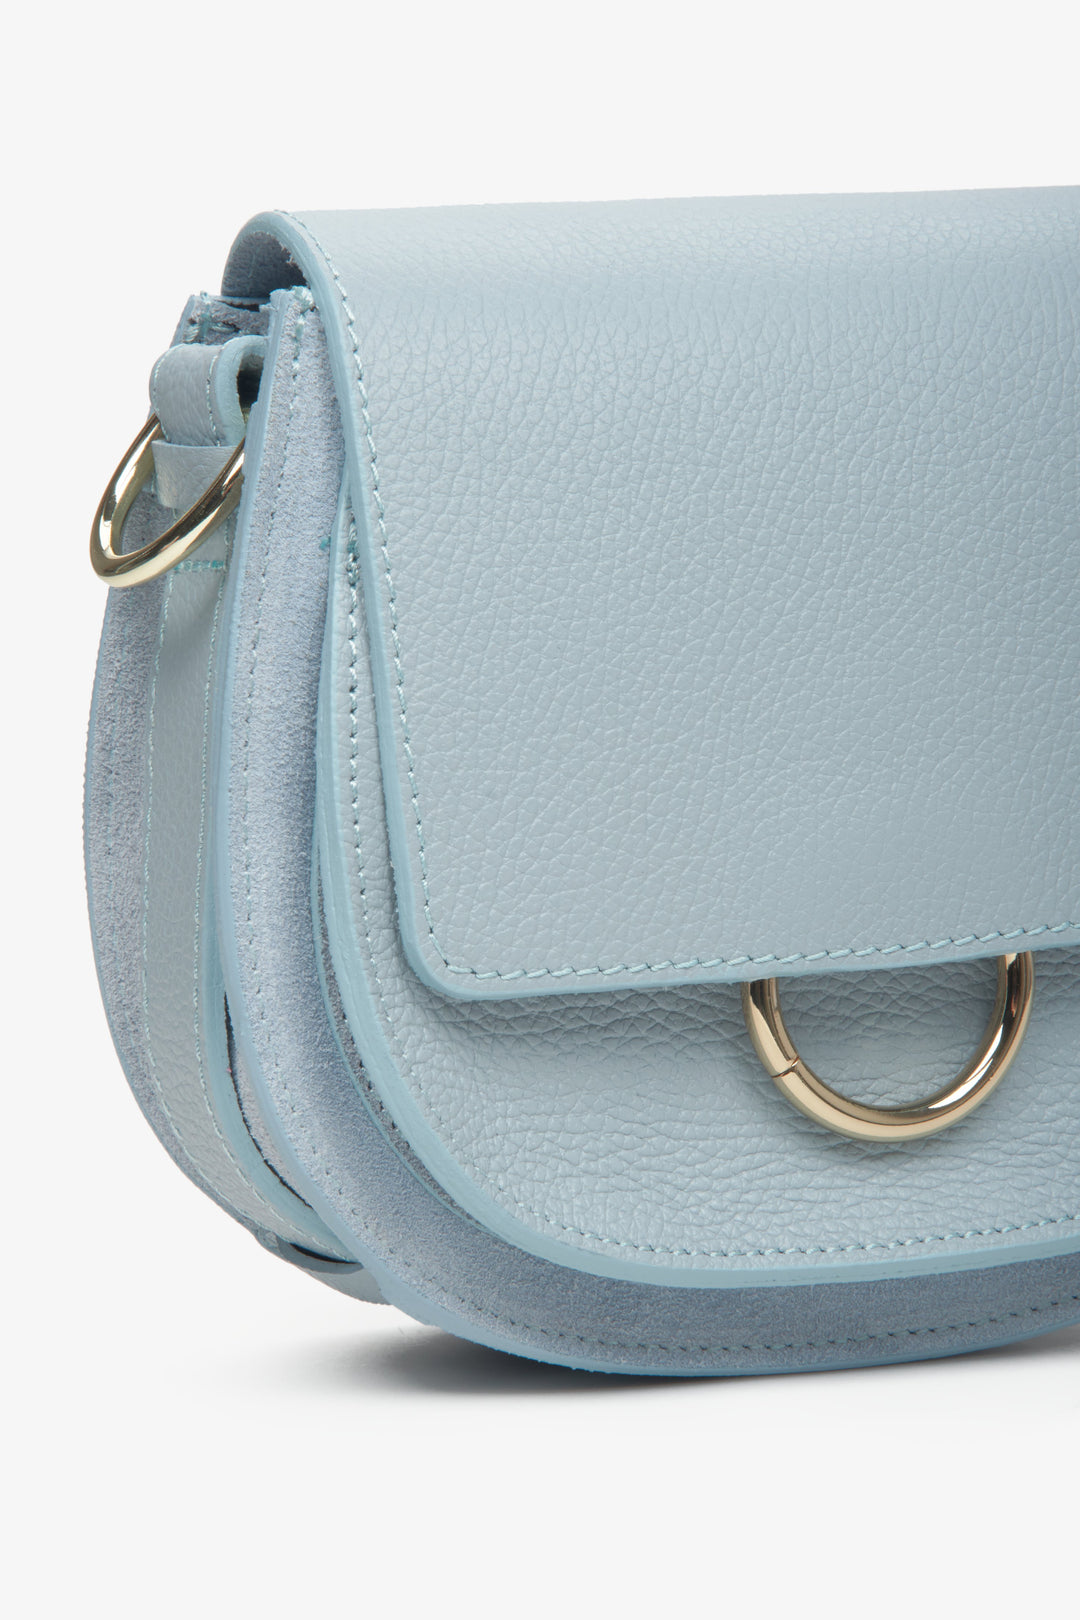 Small Italian leather blue crossbody women's bag.